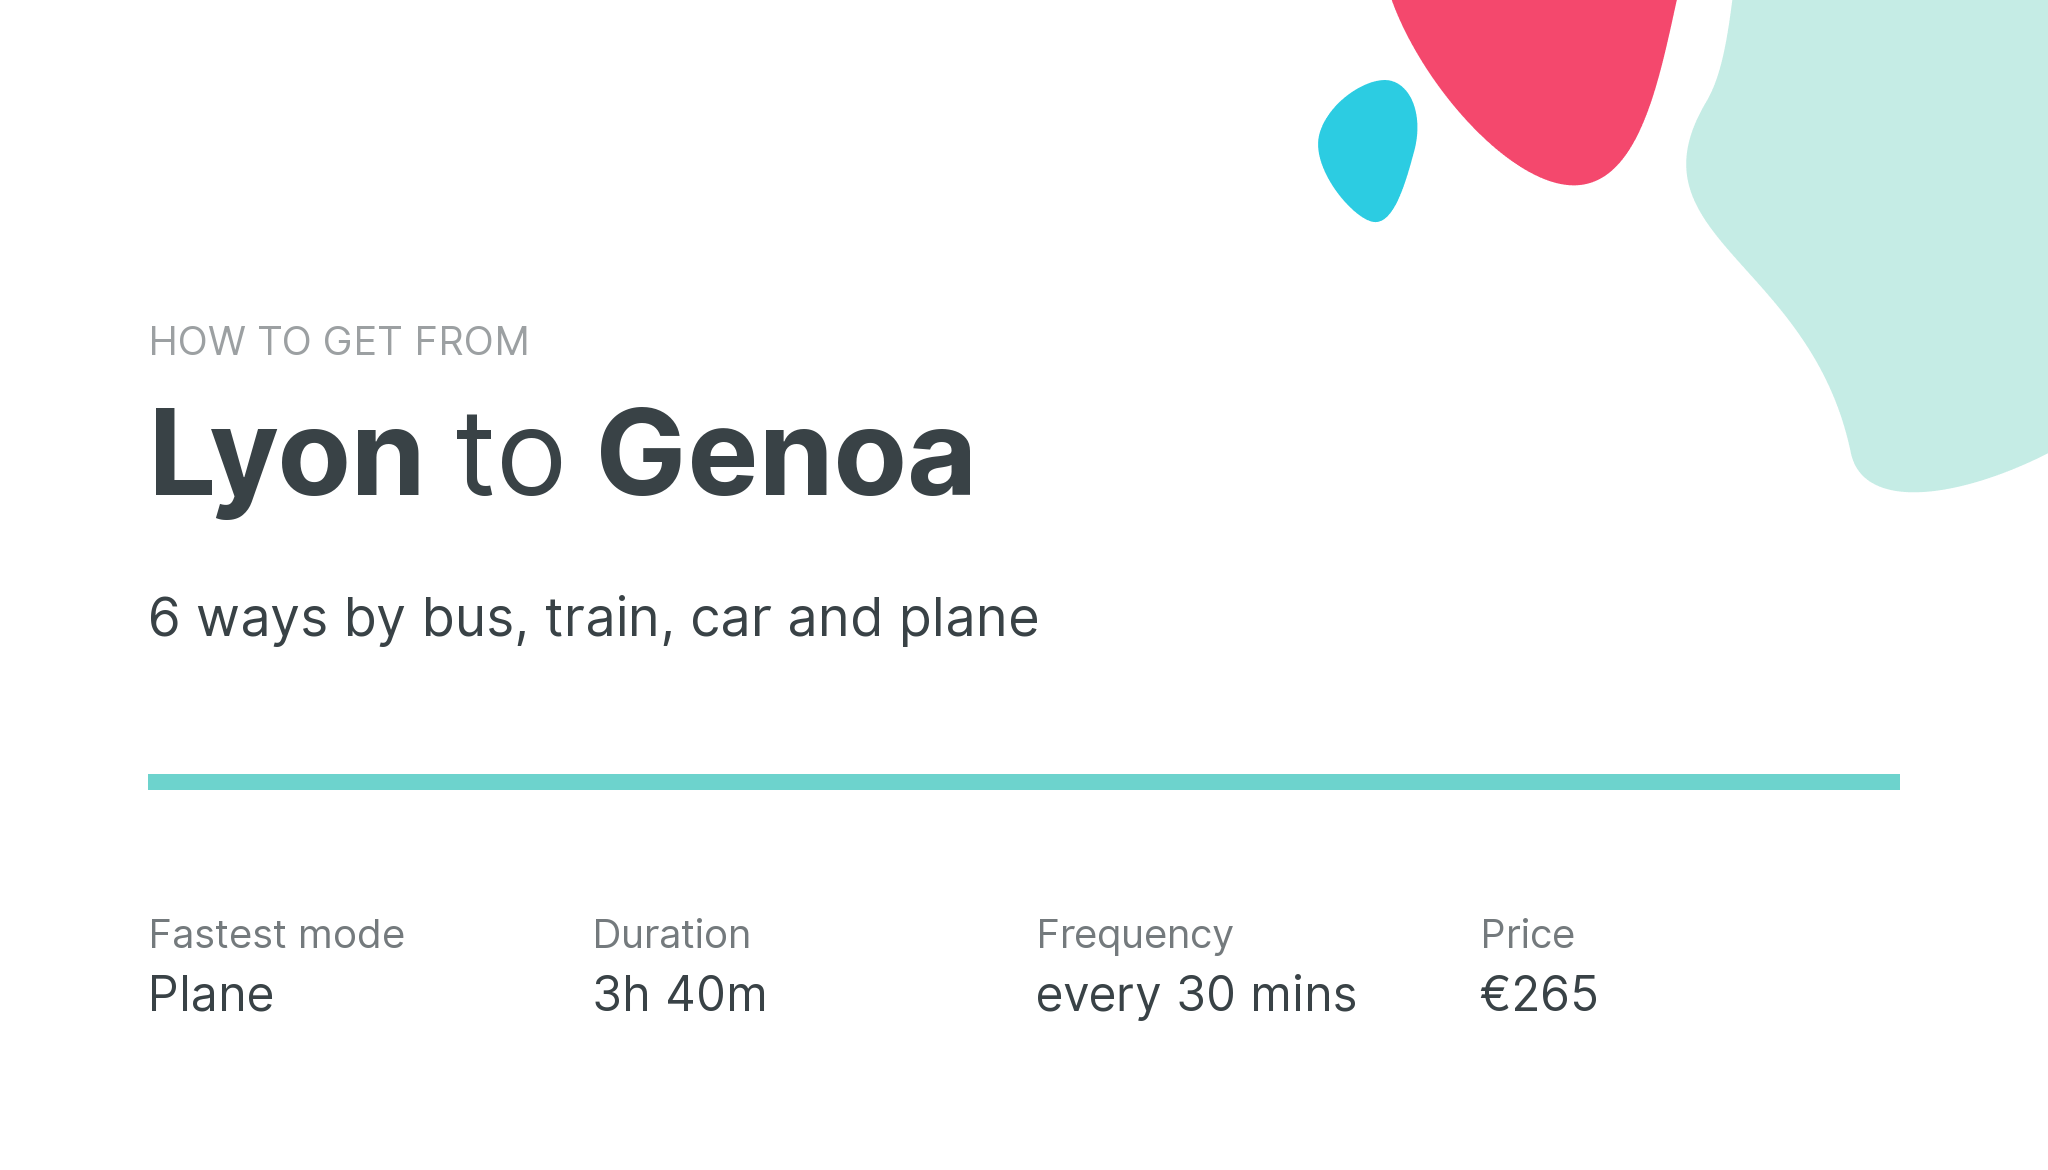 How do I get from Lyon to Genoa